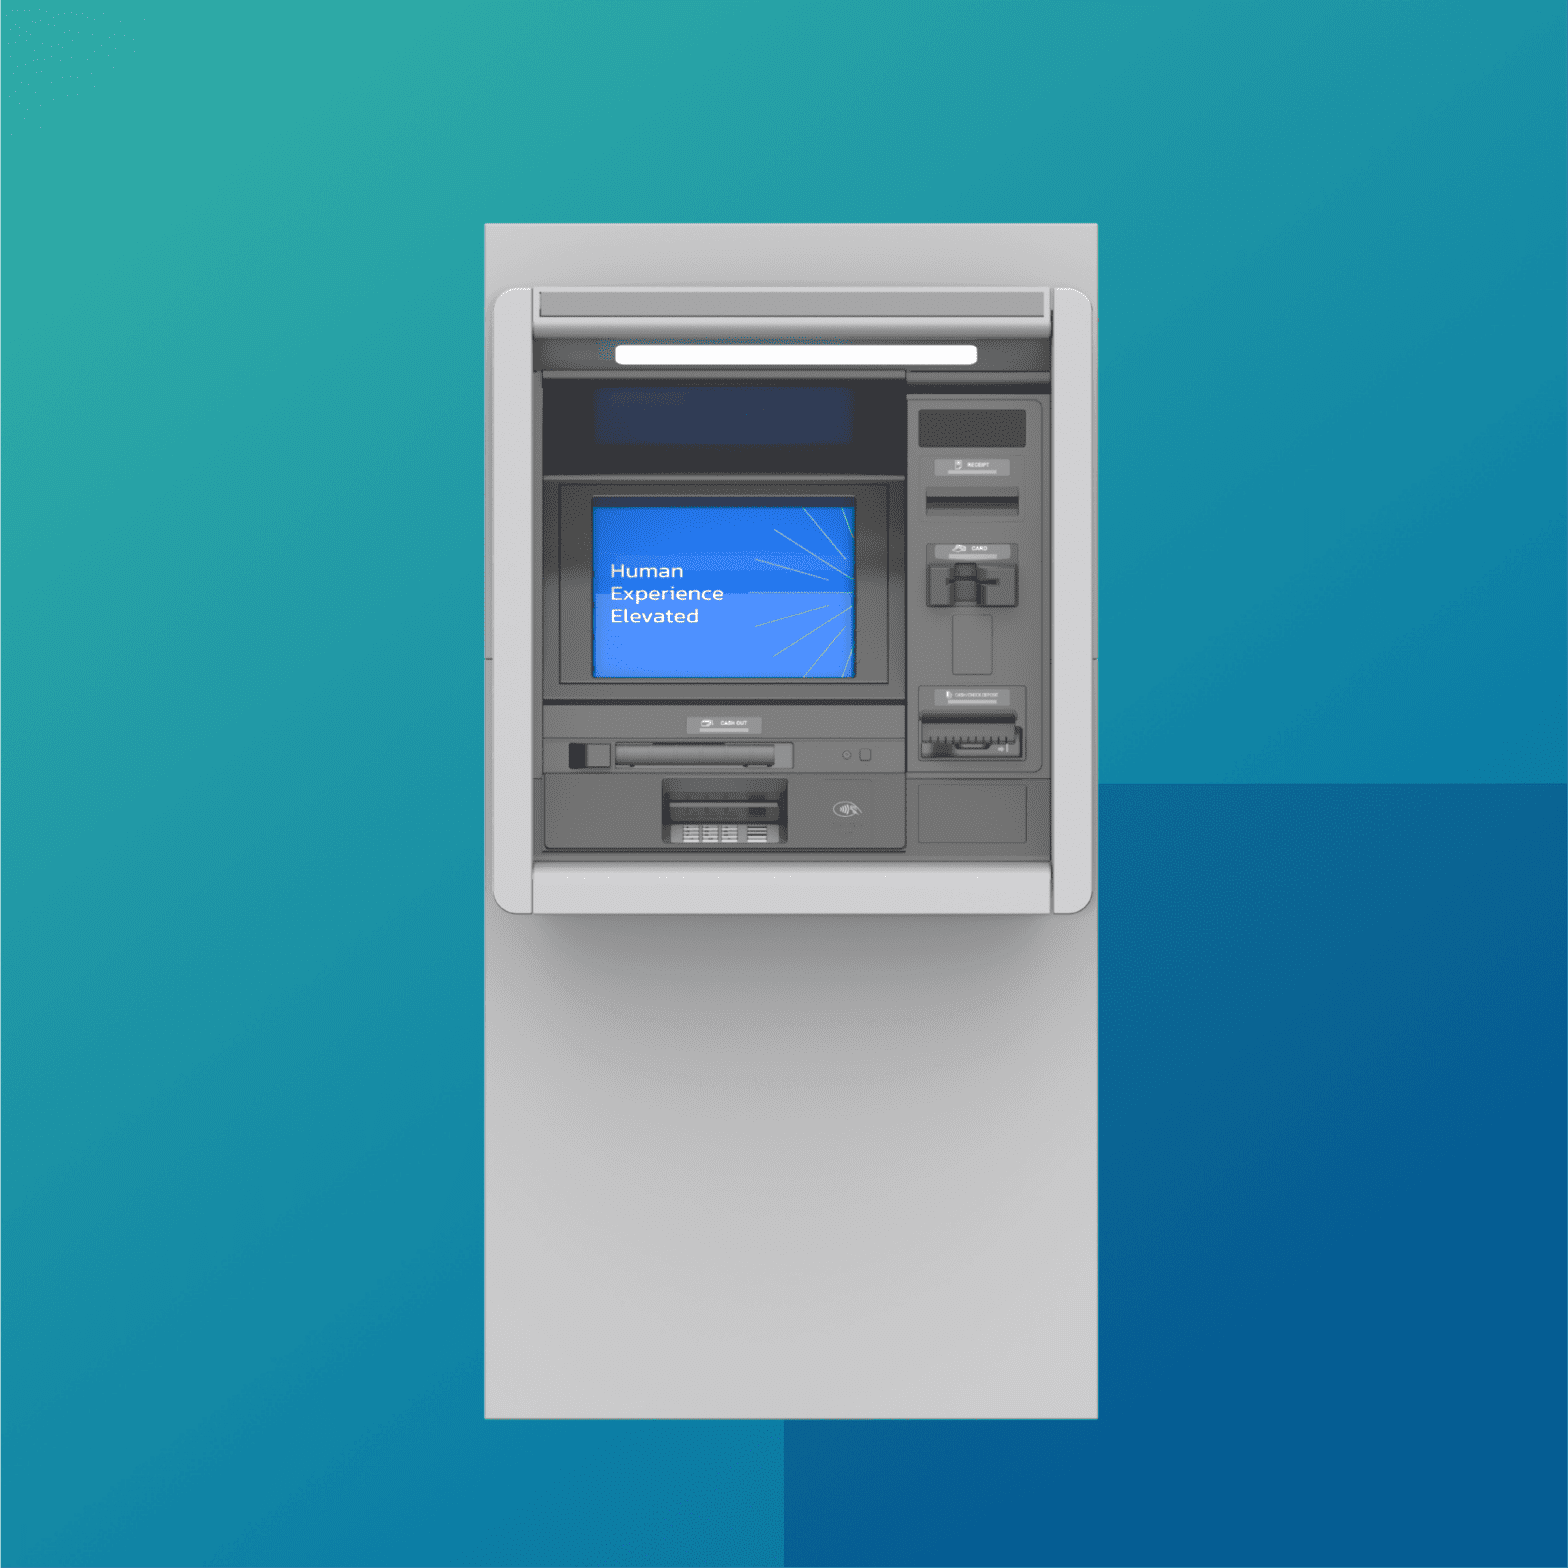 Hyosung 7T(MX7600TA) 이미지, Hyosung의 입증되고 신뢰할 수 있는 전체 기능의 벽면 통과형 ATM